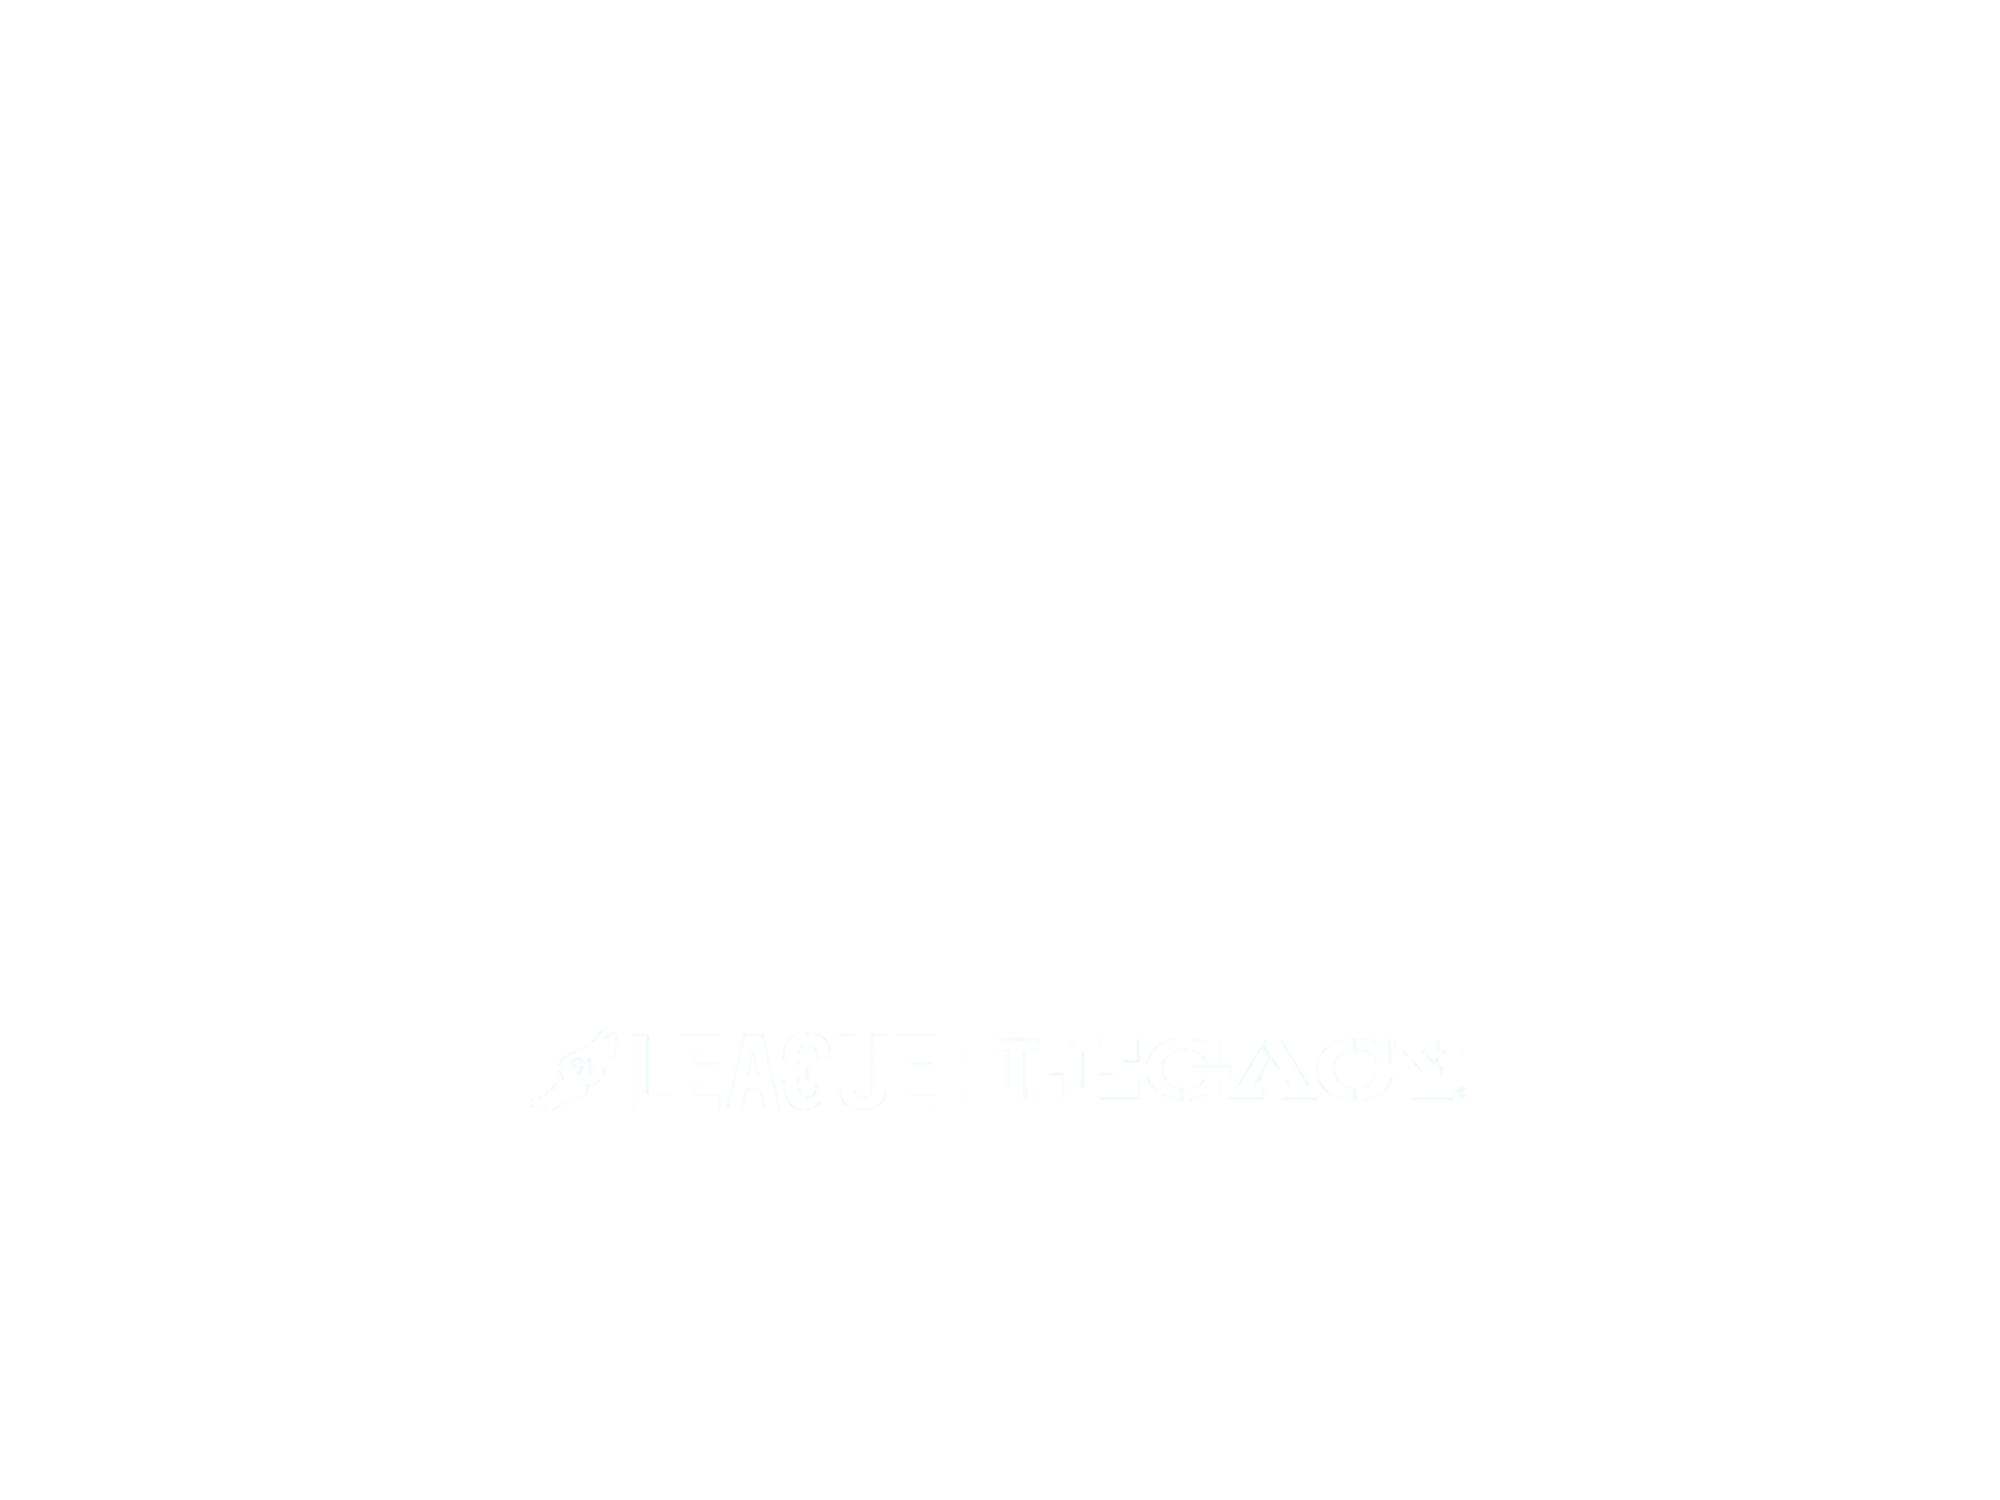 Abb-P-league-legacy